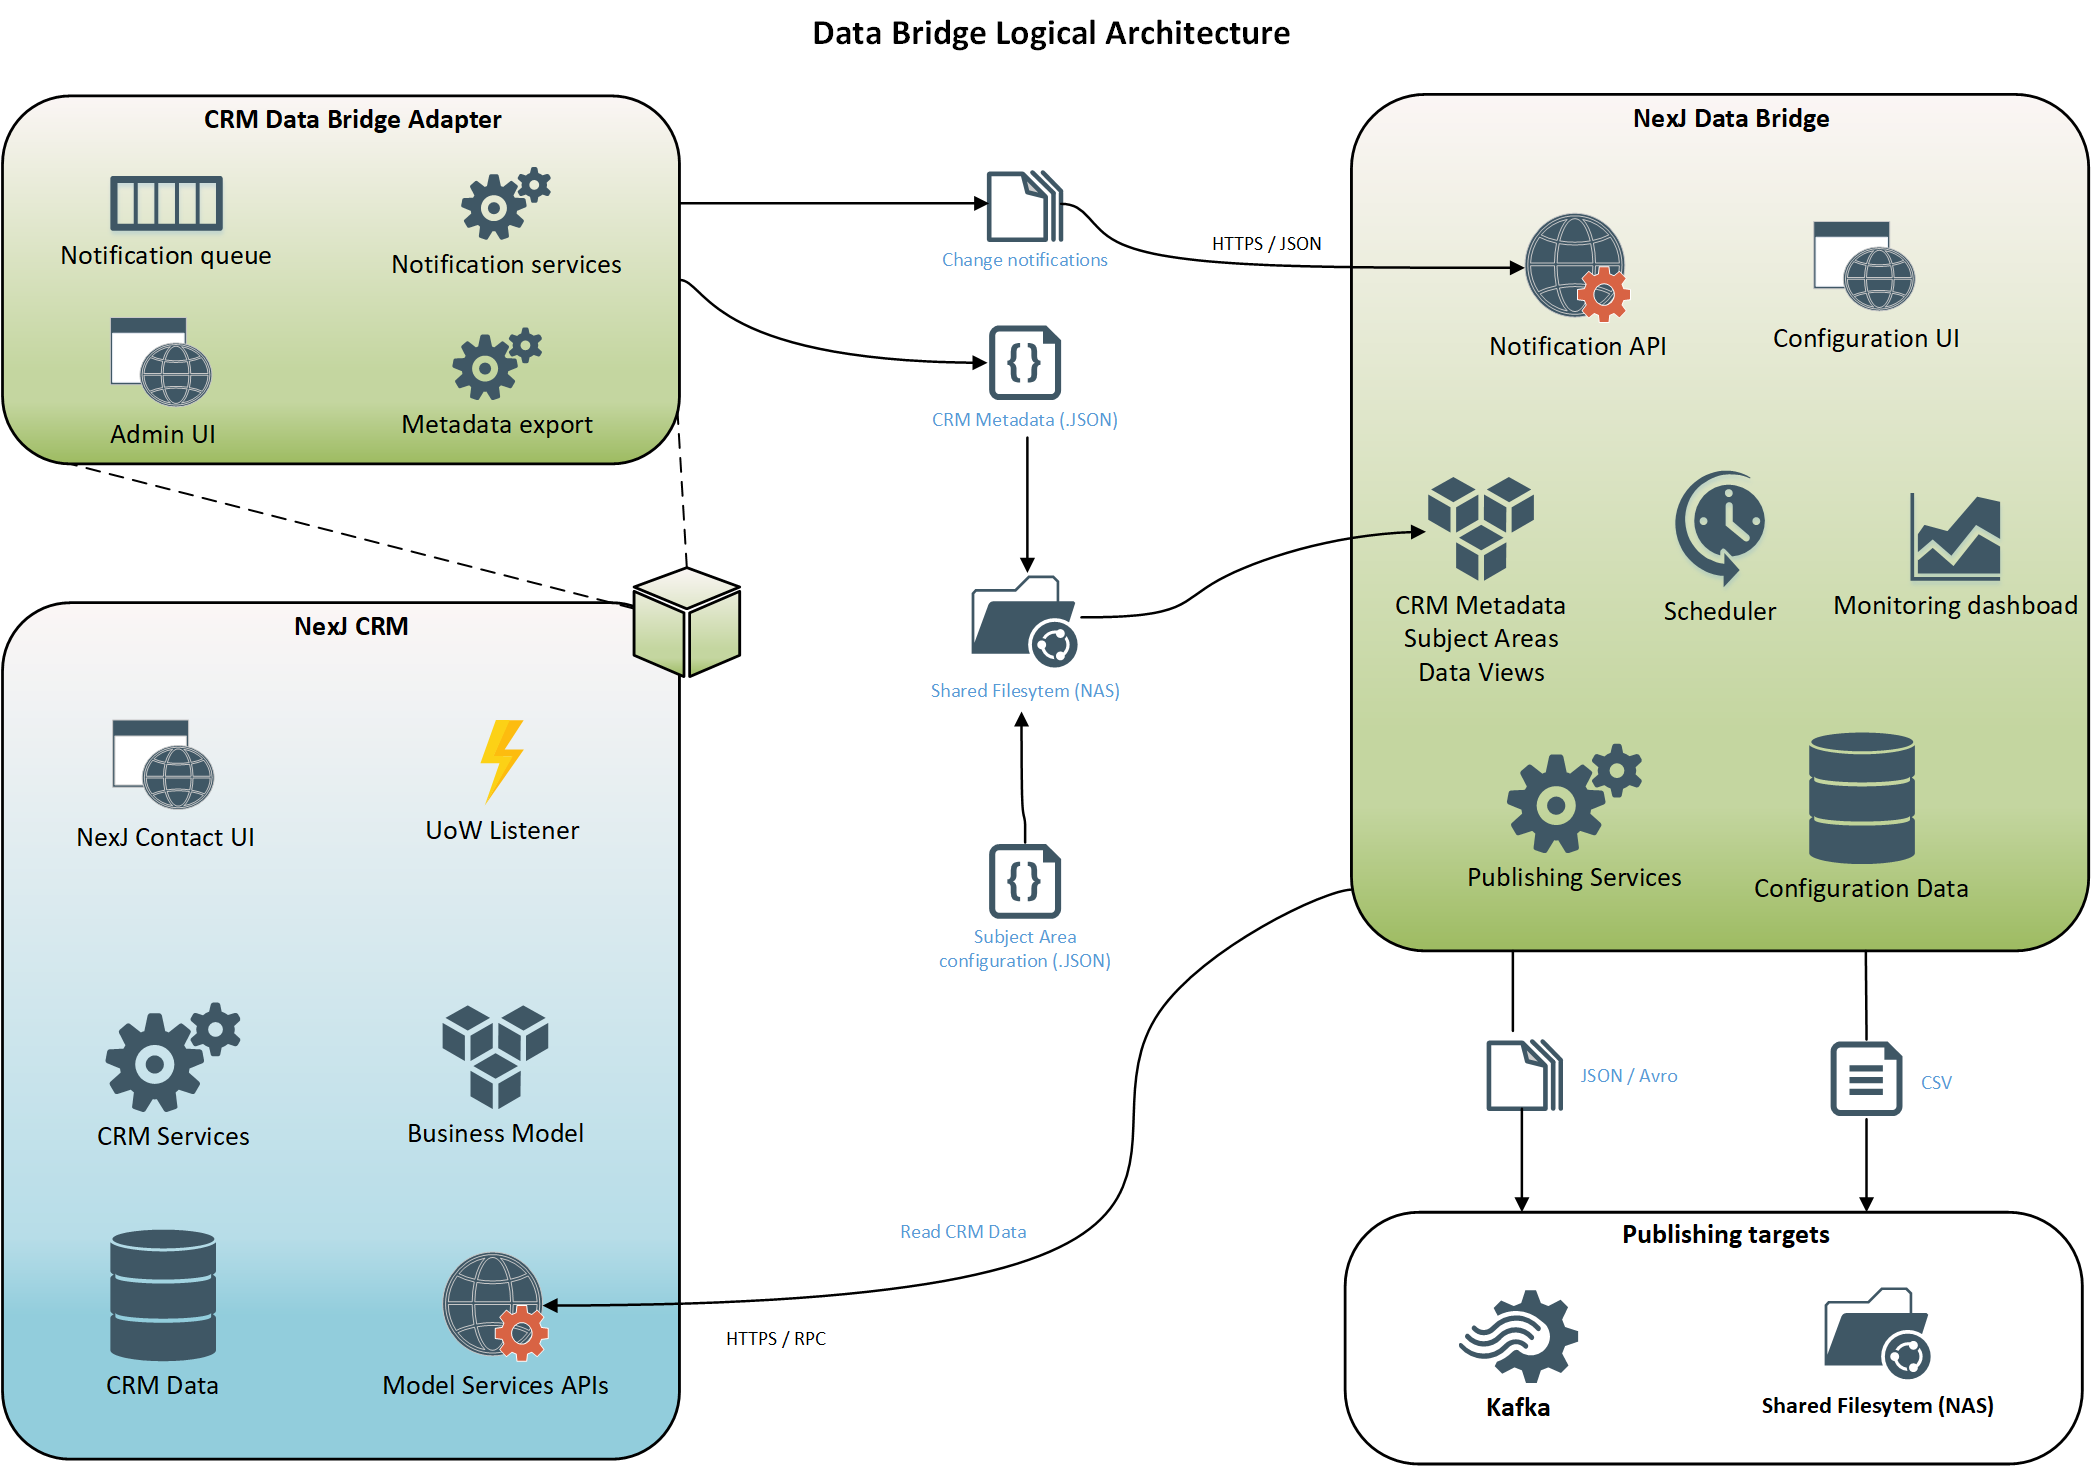 Data Bridge 3.x logical architecture